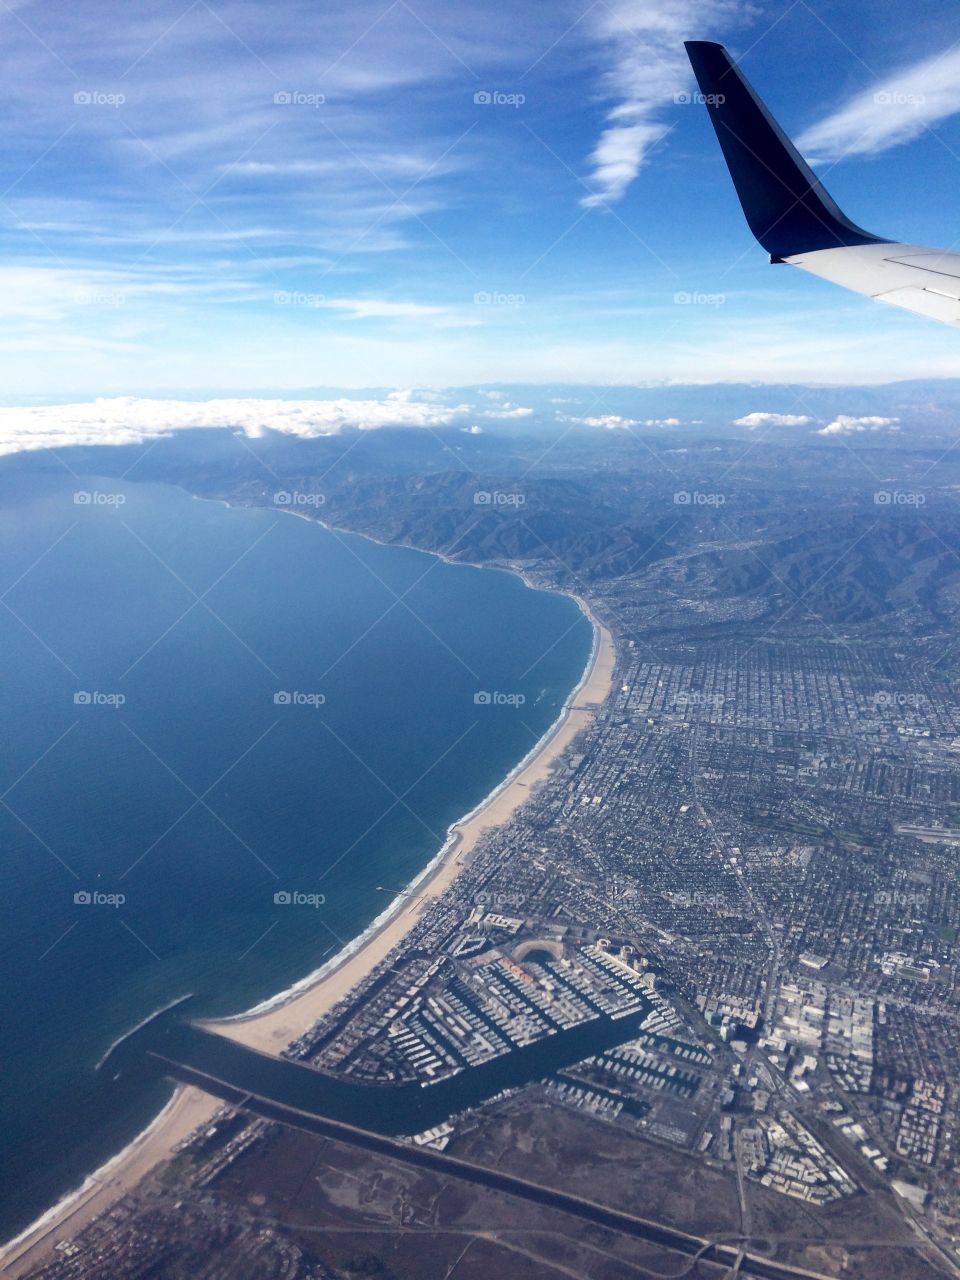 Leaving Los Angeles. California Coast. LAX departure. Taken October 2016.